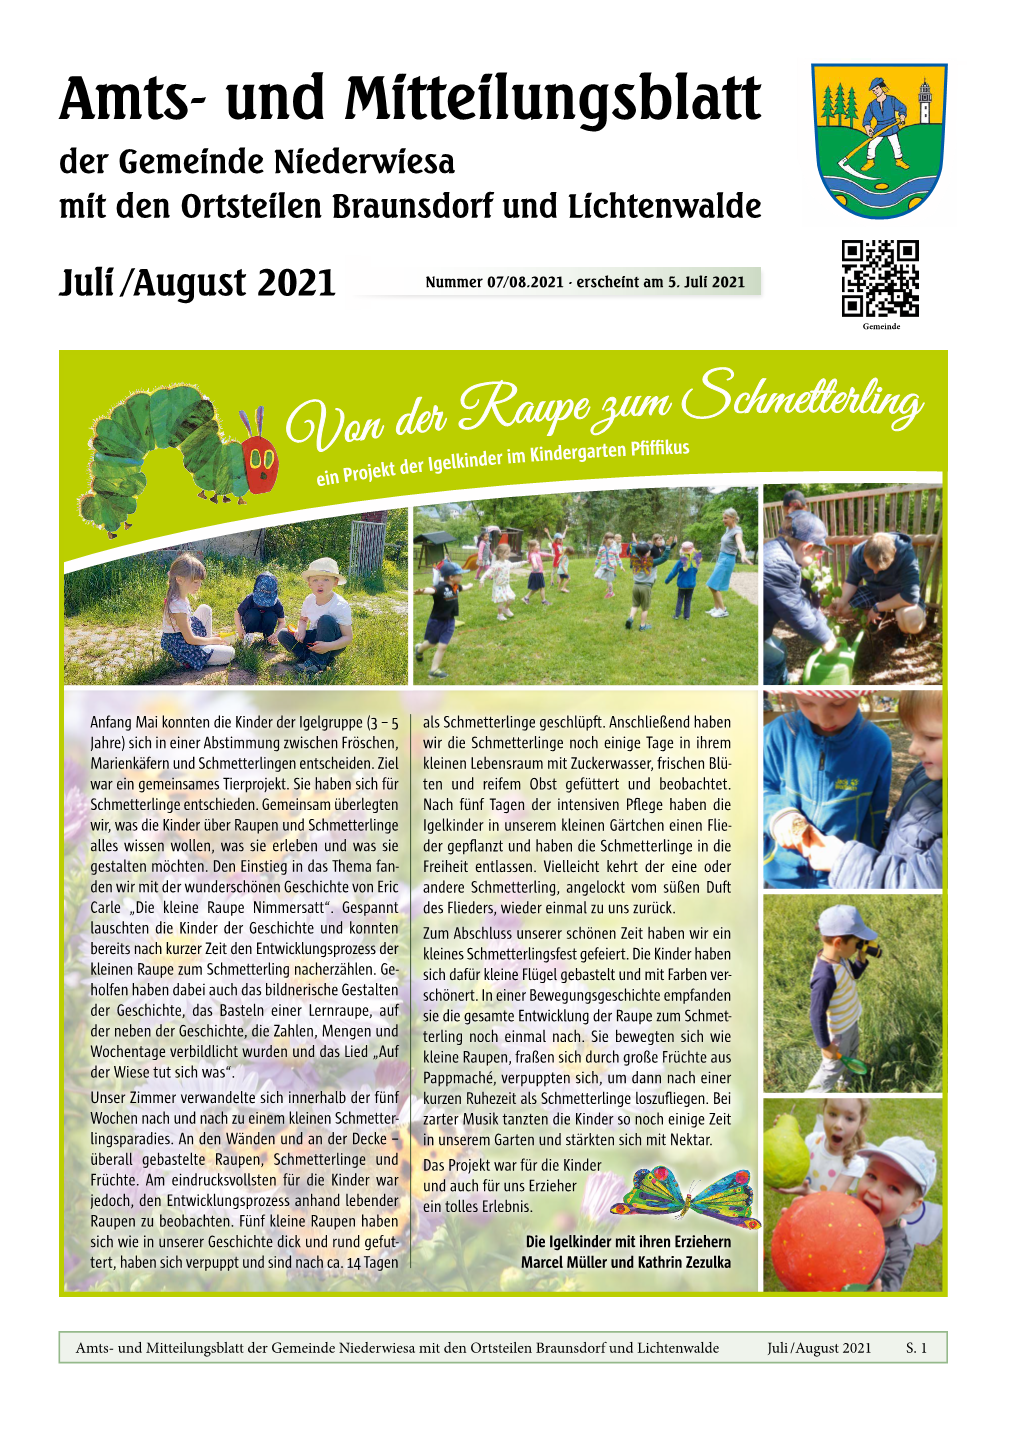 Amtsblatt Niederwiesa – Juli/August 2021